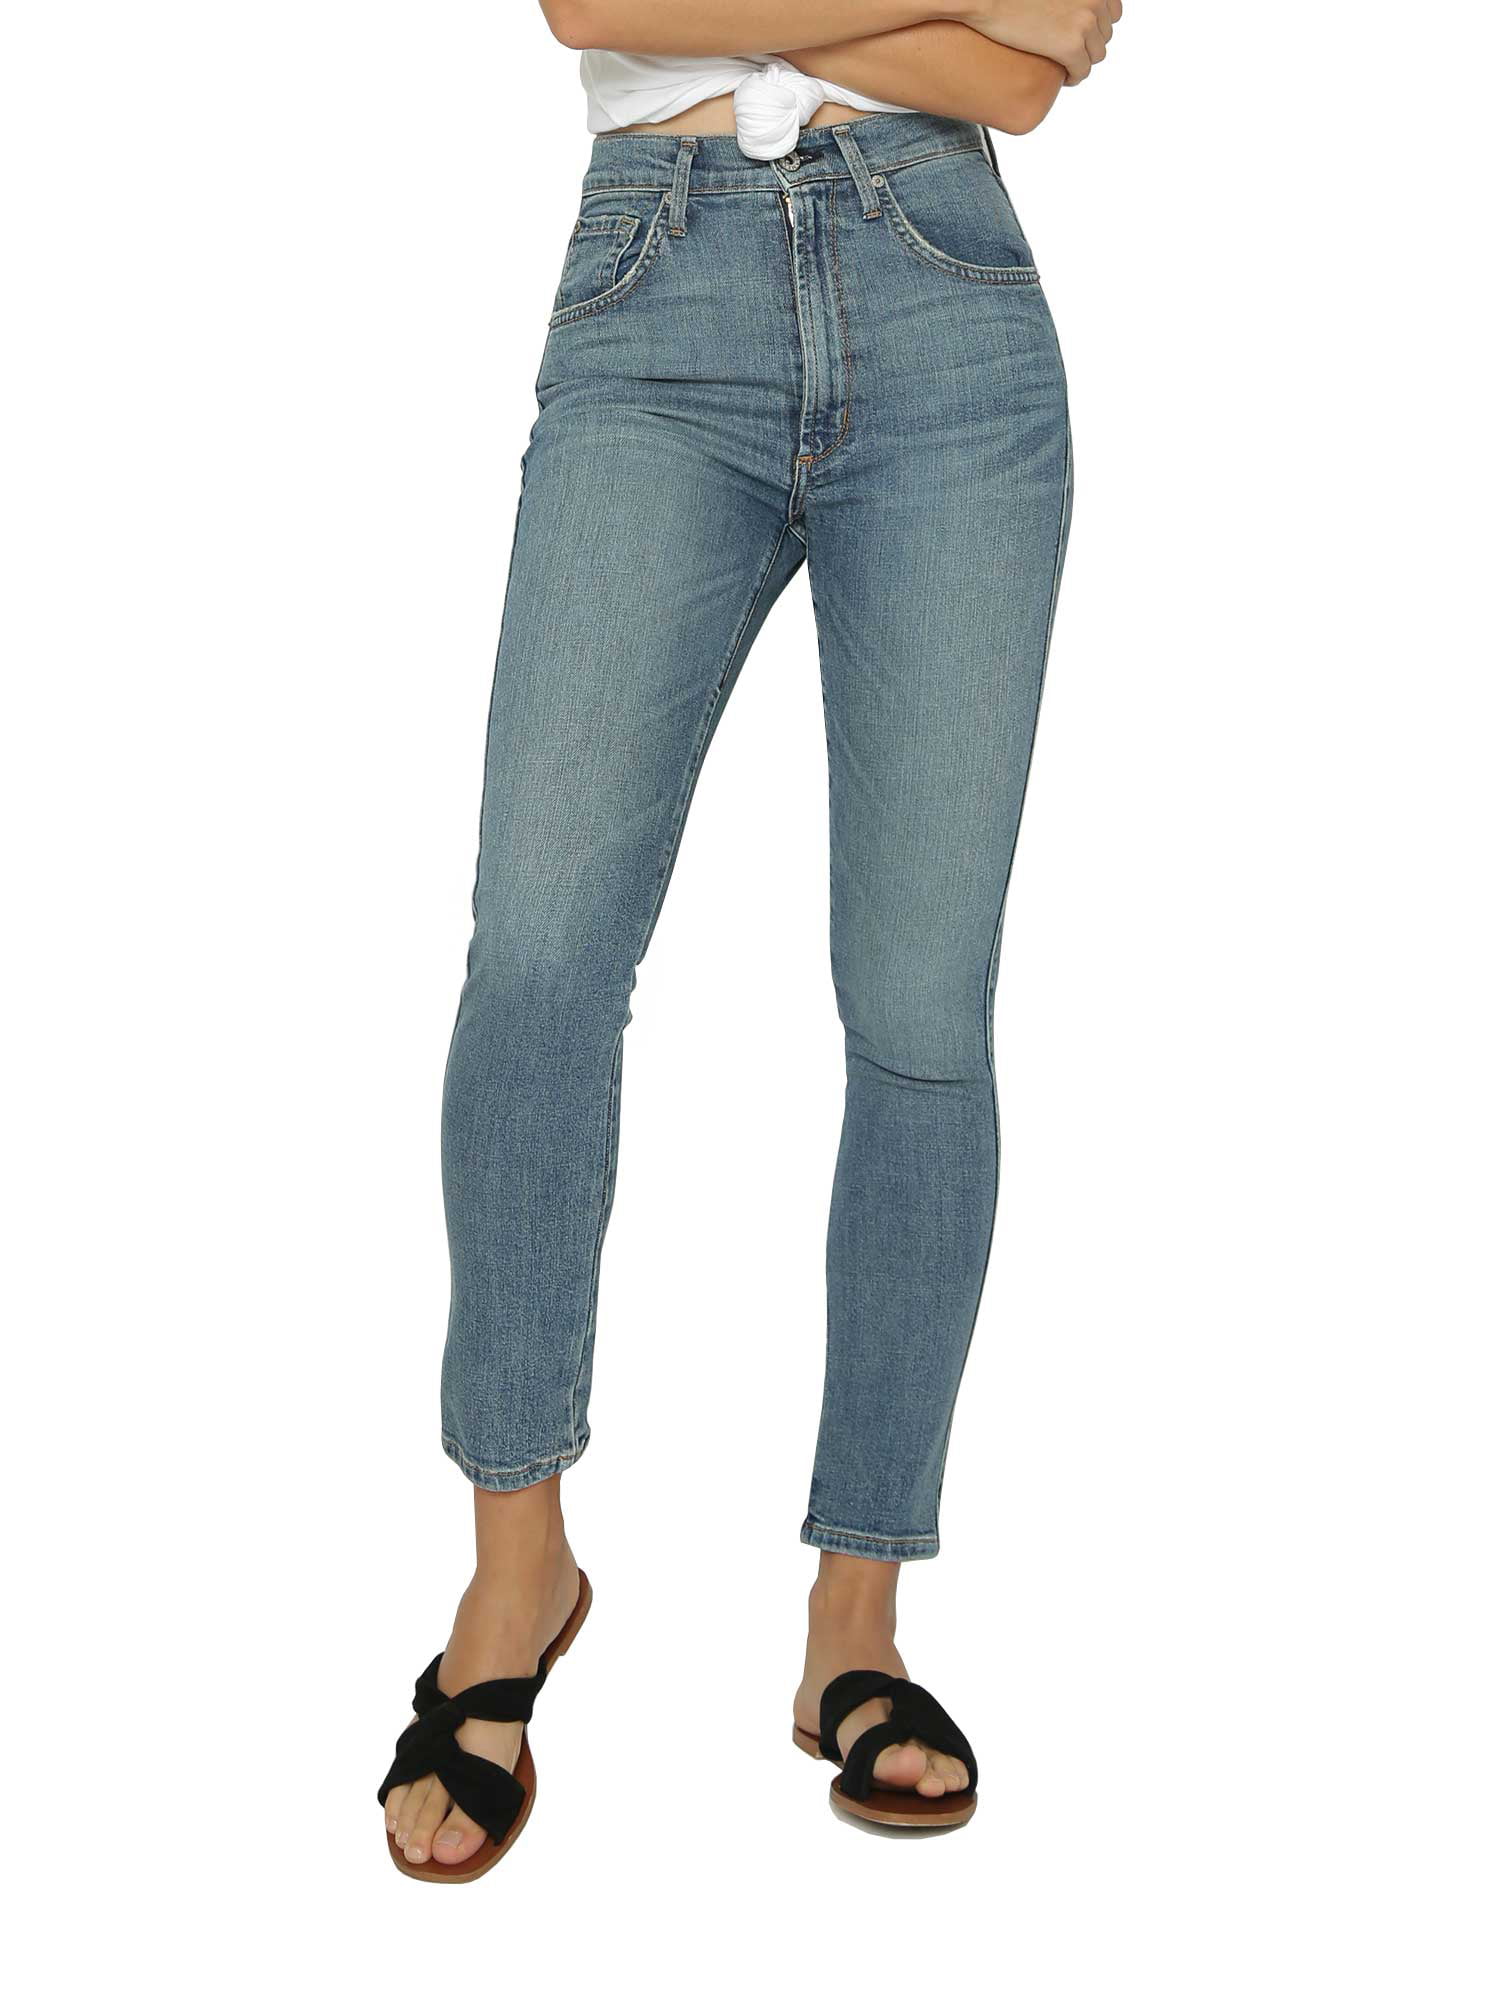 James Jeans - Women's Skylar Ultra High Rise Skinny Jean - Walmart.com ...